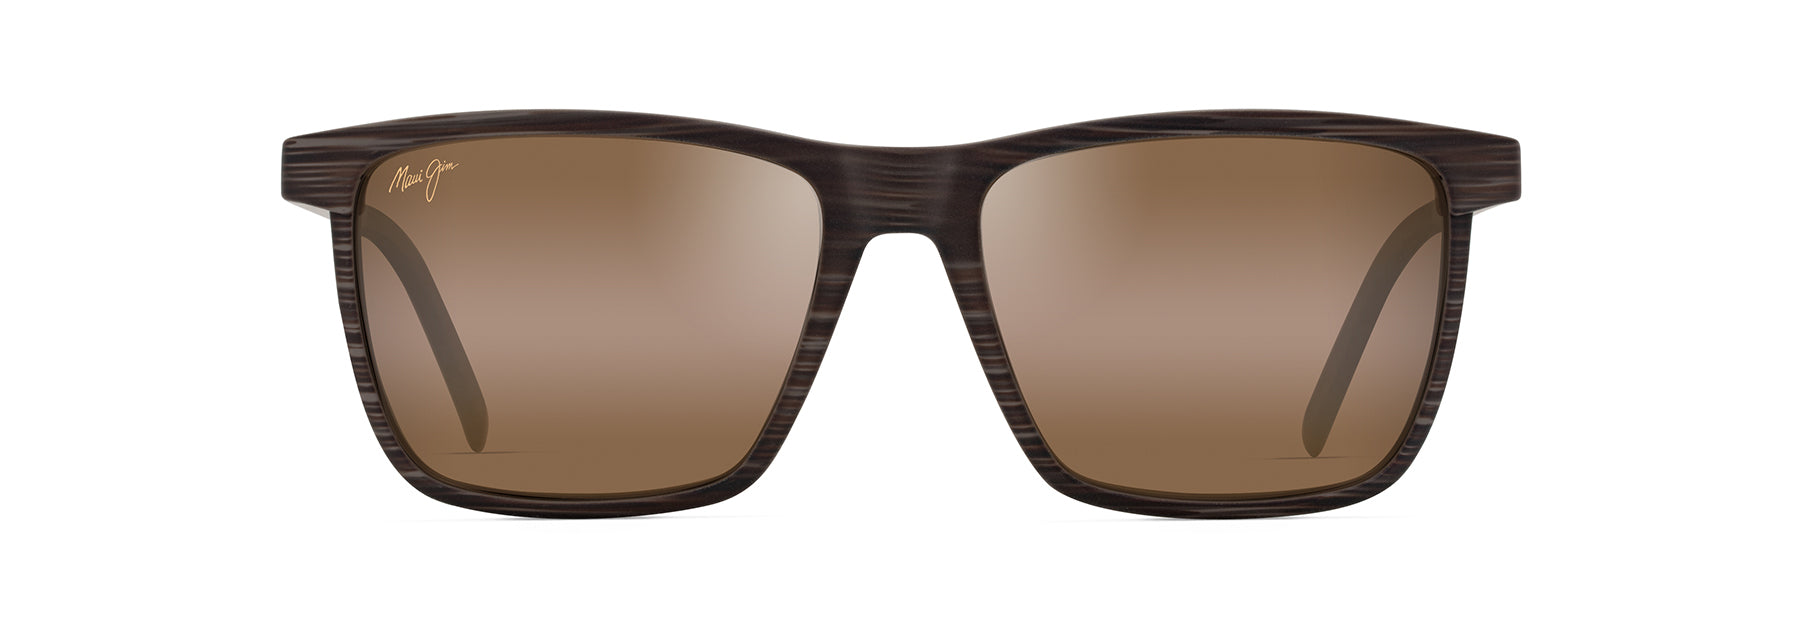 Maui Jim One Way Sunglasses American – Sunglass